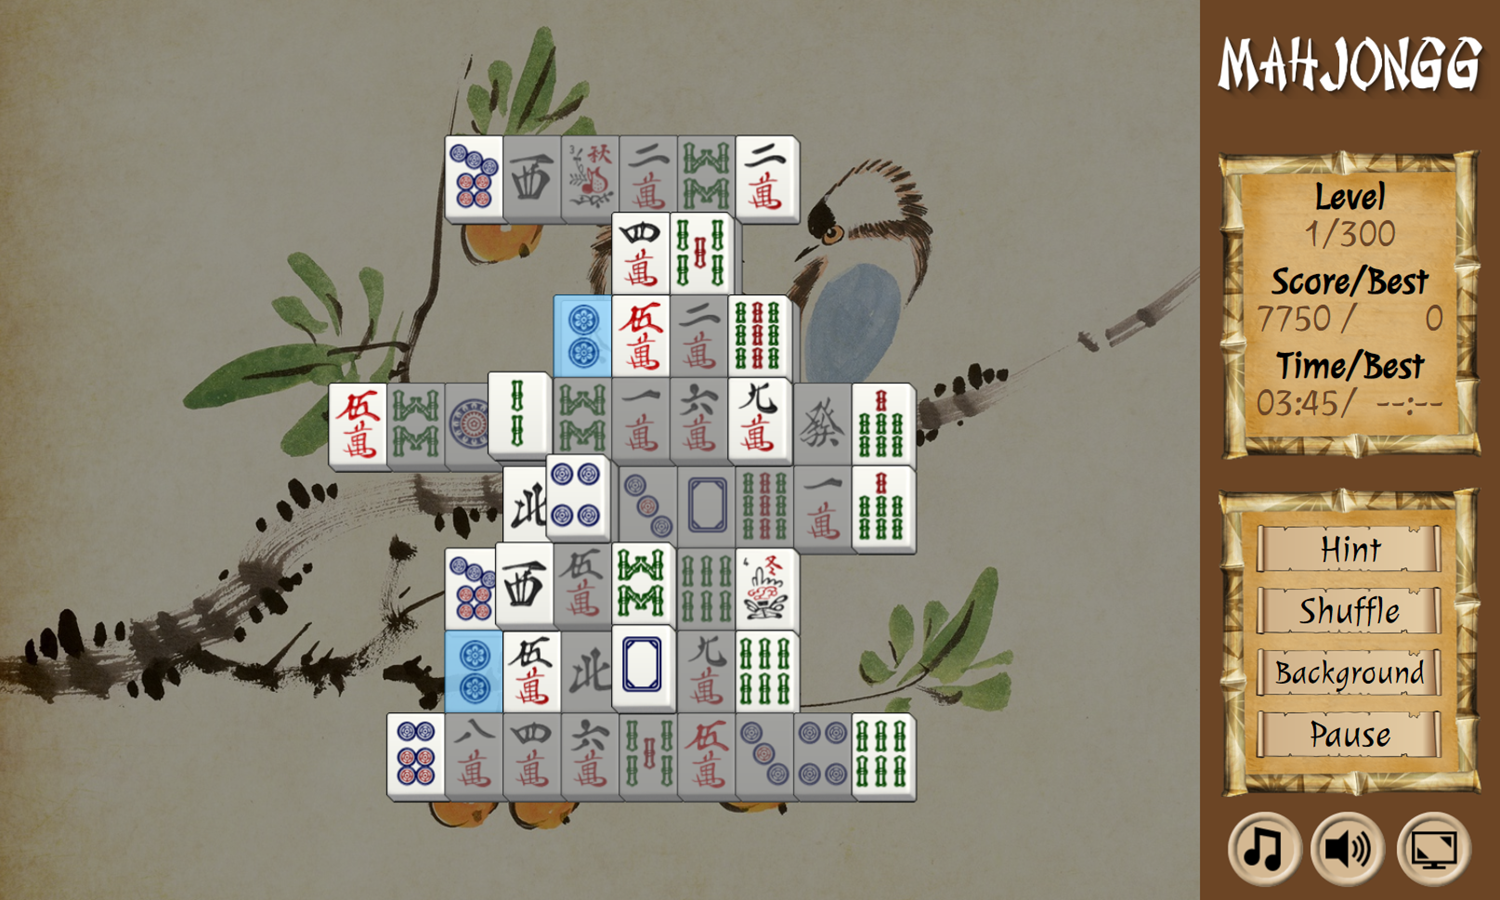 Mahjongg Game Level Play Screenshot.